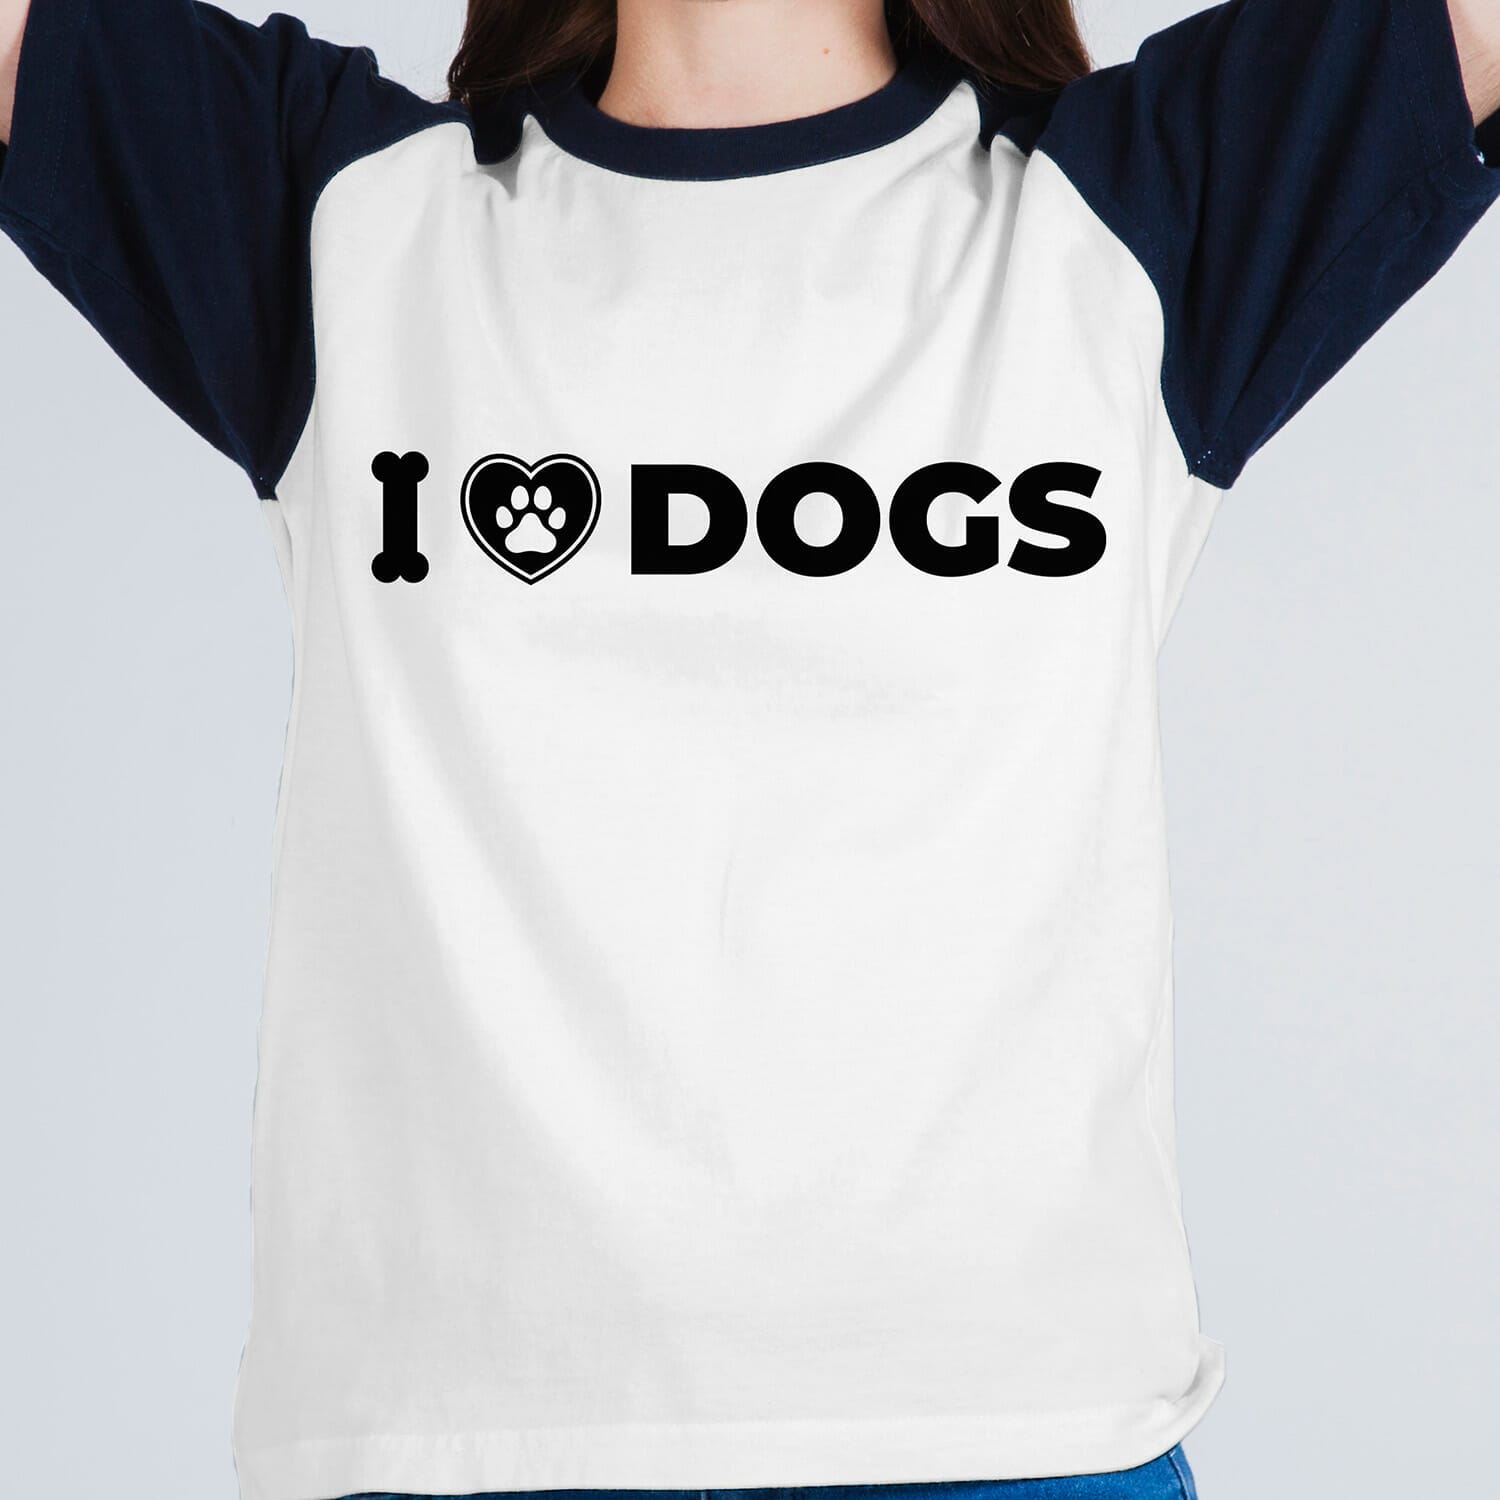 I love dogs Free T-shirt Design